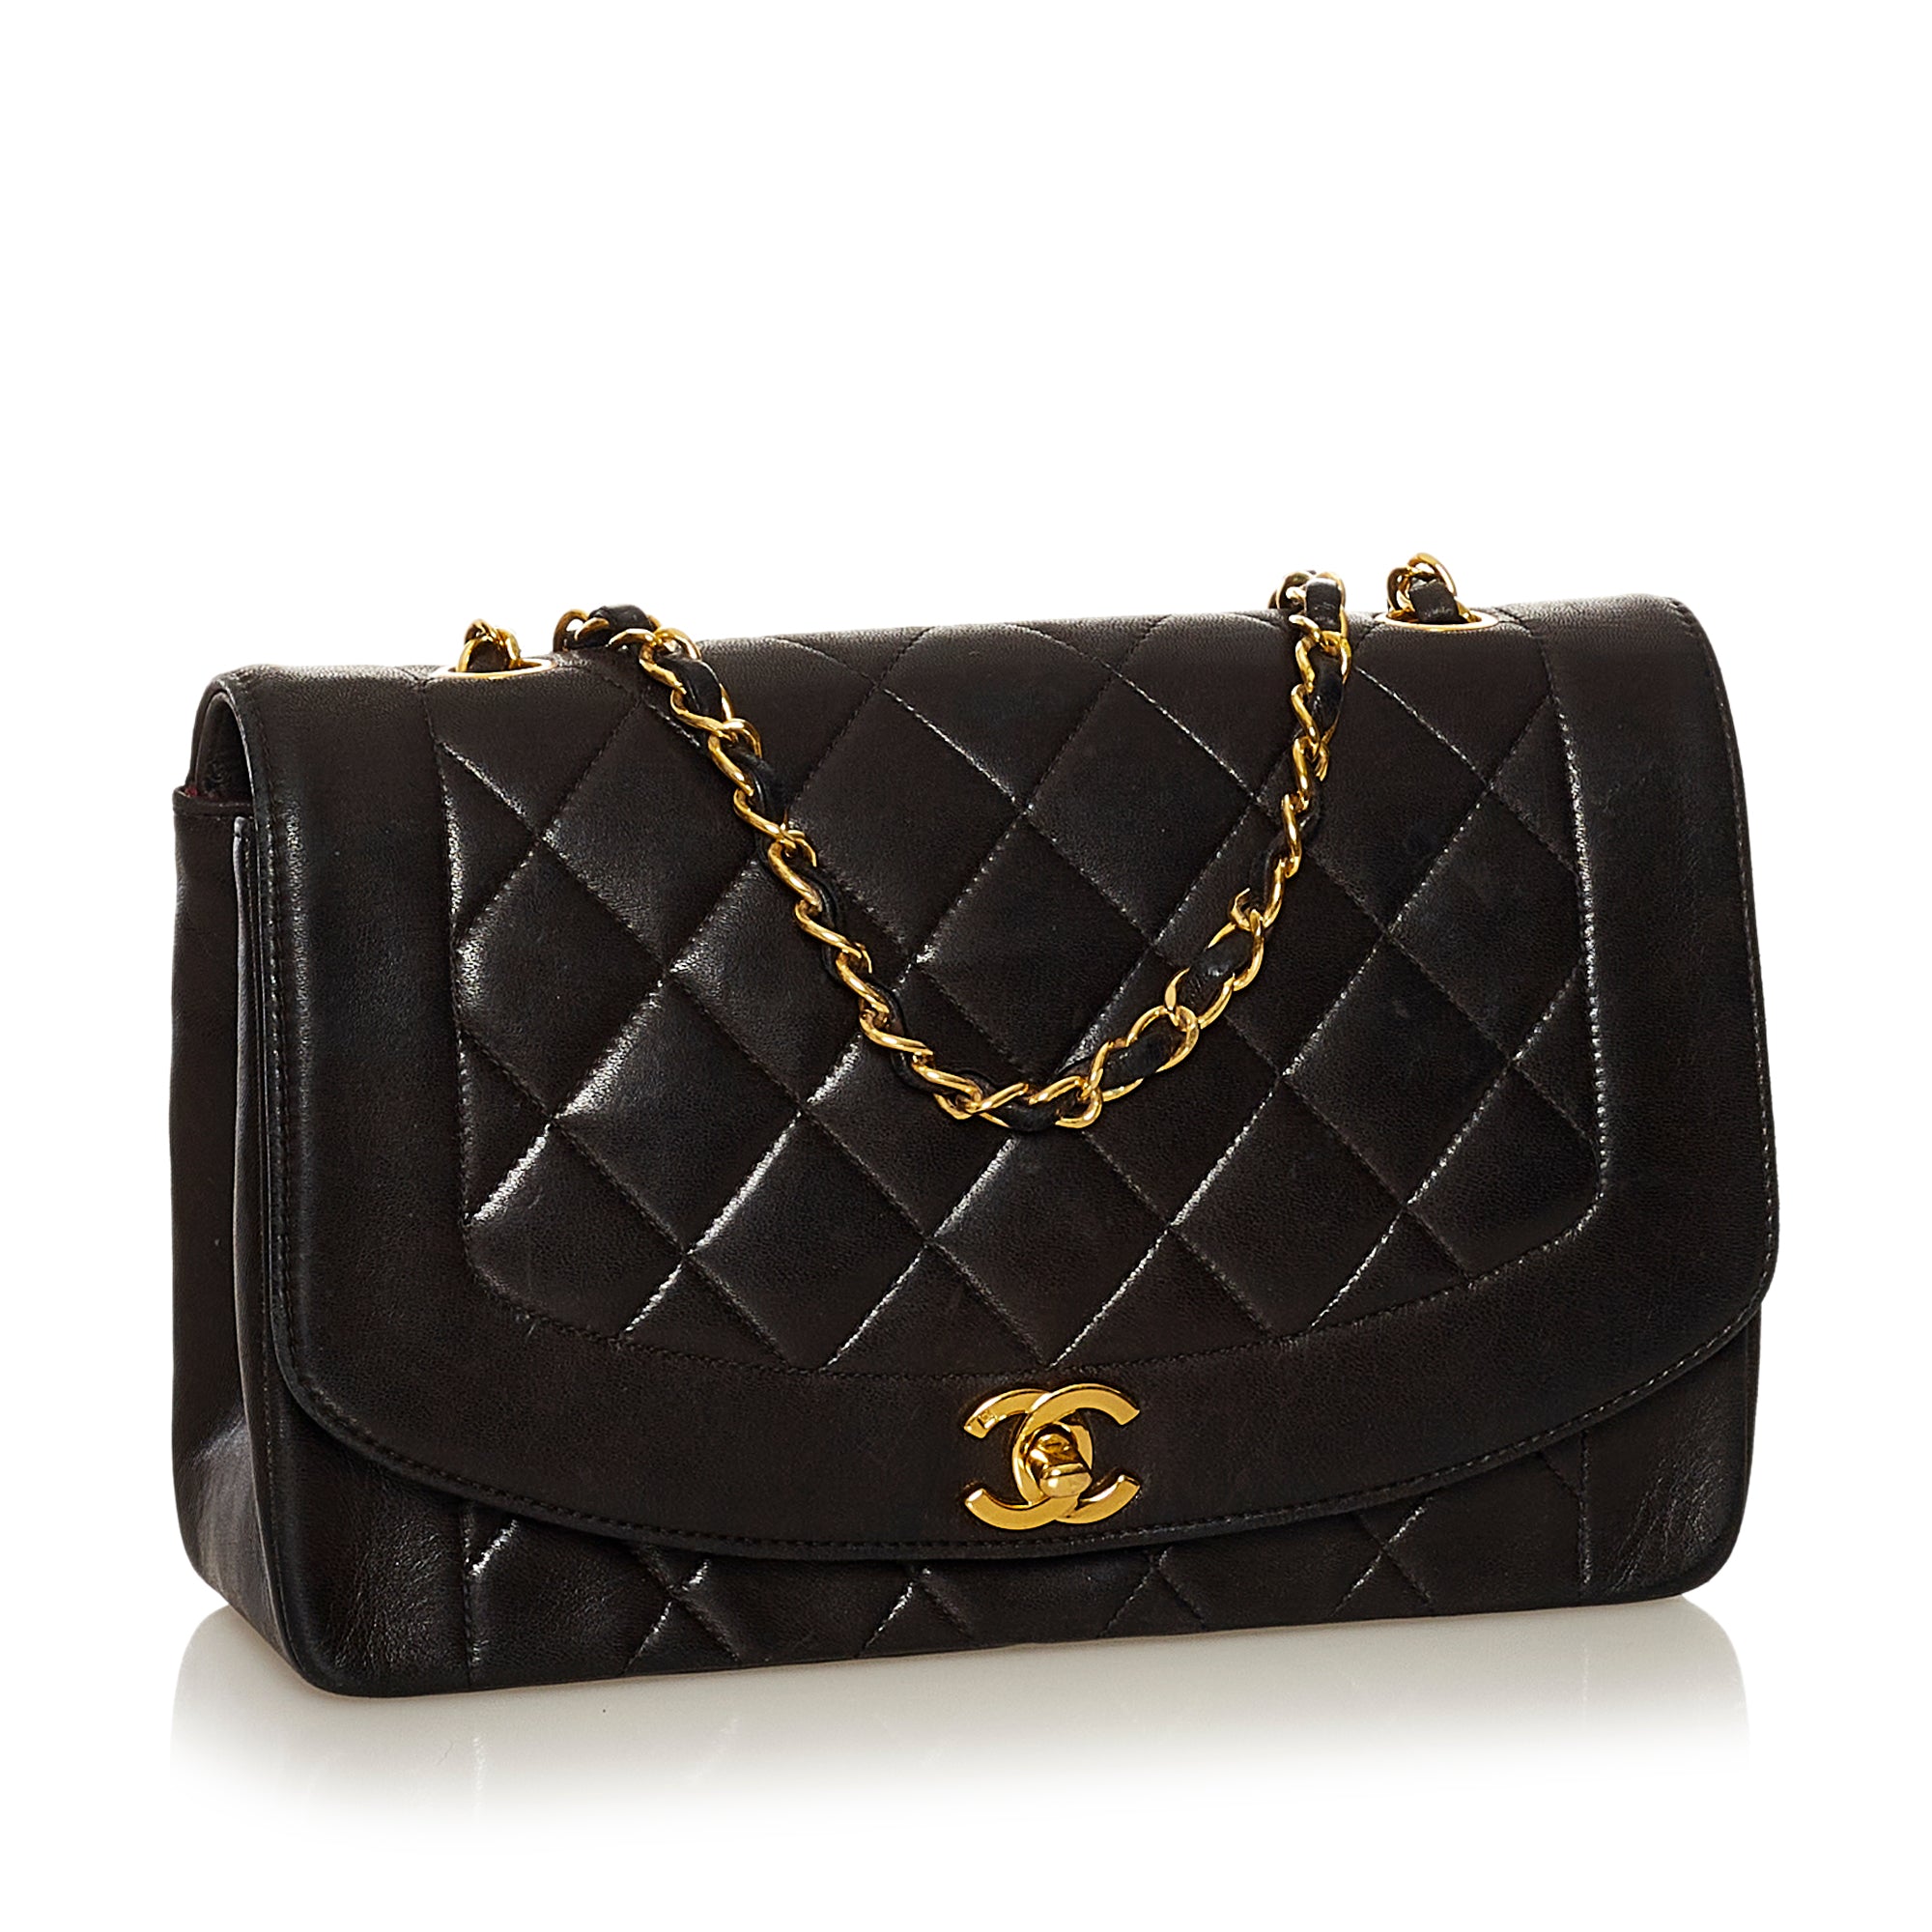 Chanel Caviar Medium Diana Flap Bag in Black